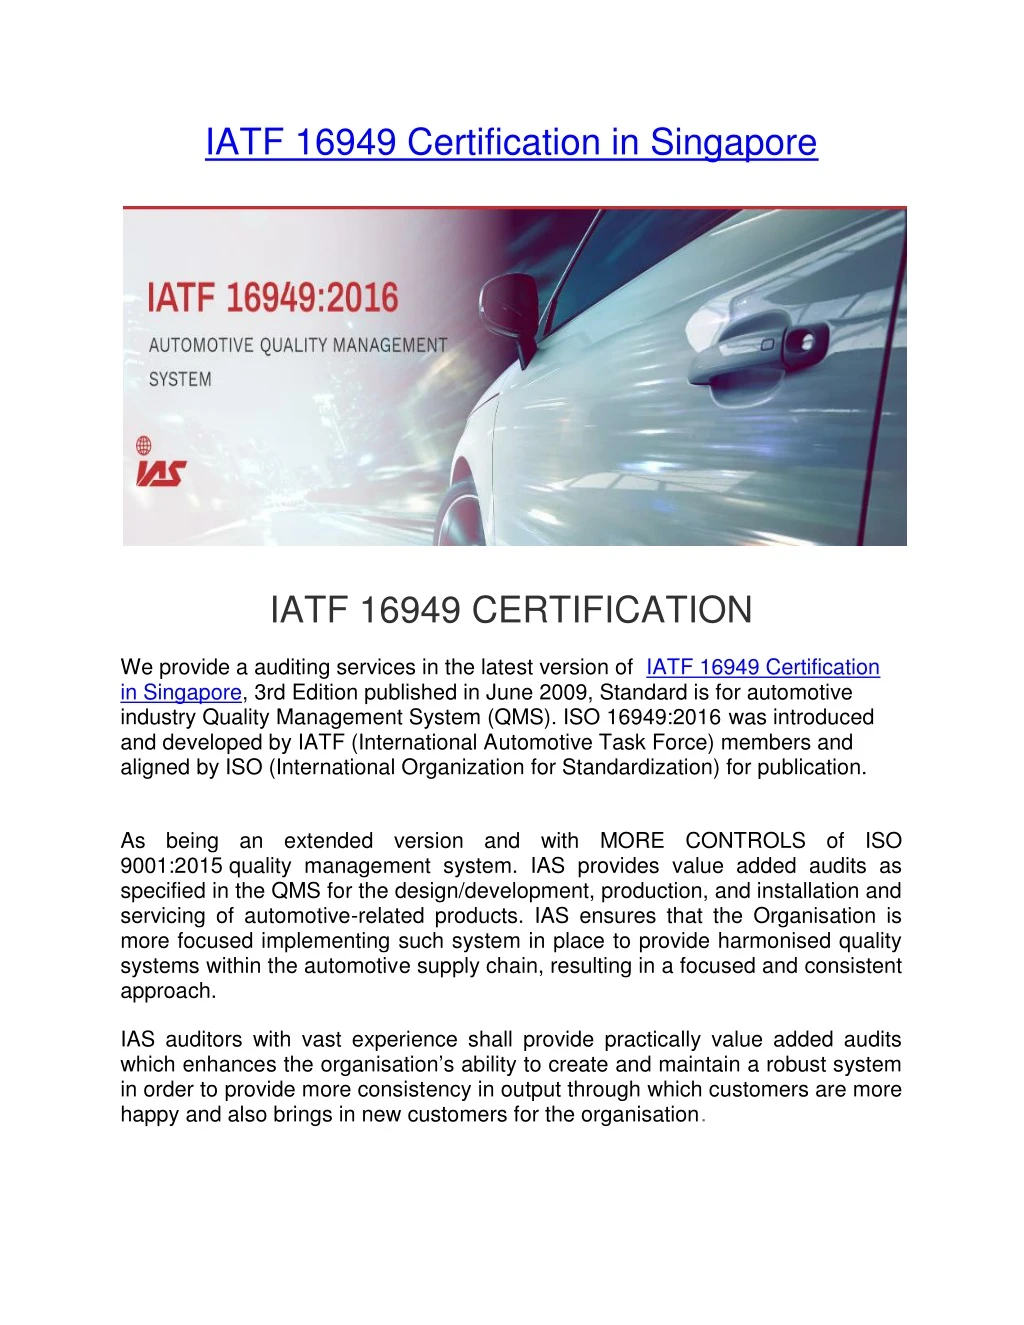 iatf 16949 certification in singapore